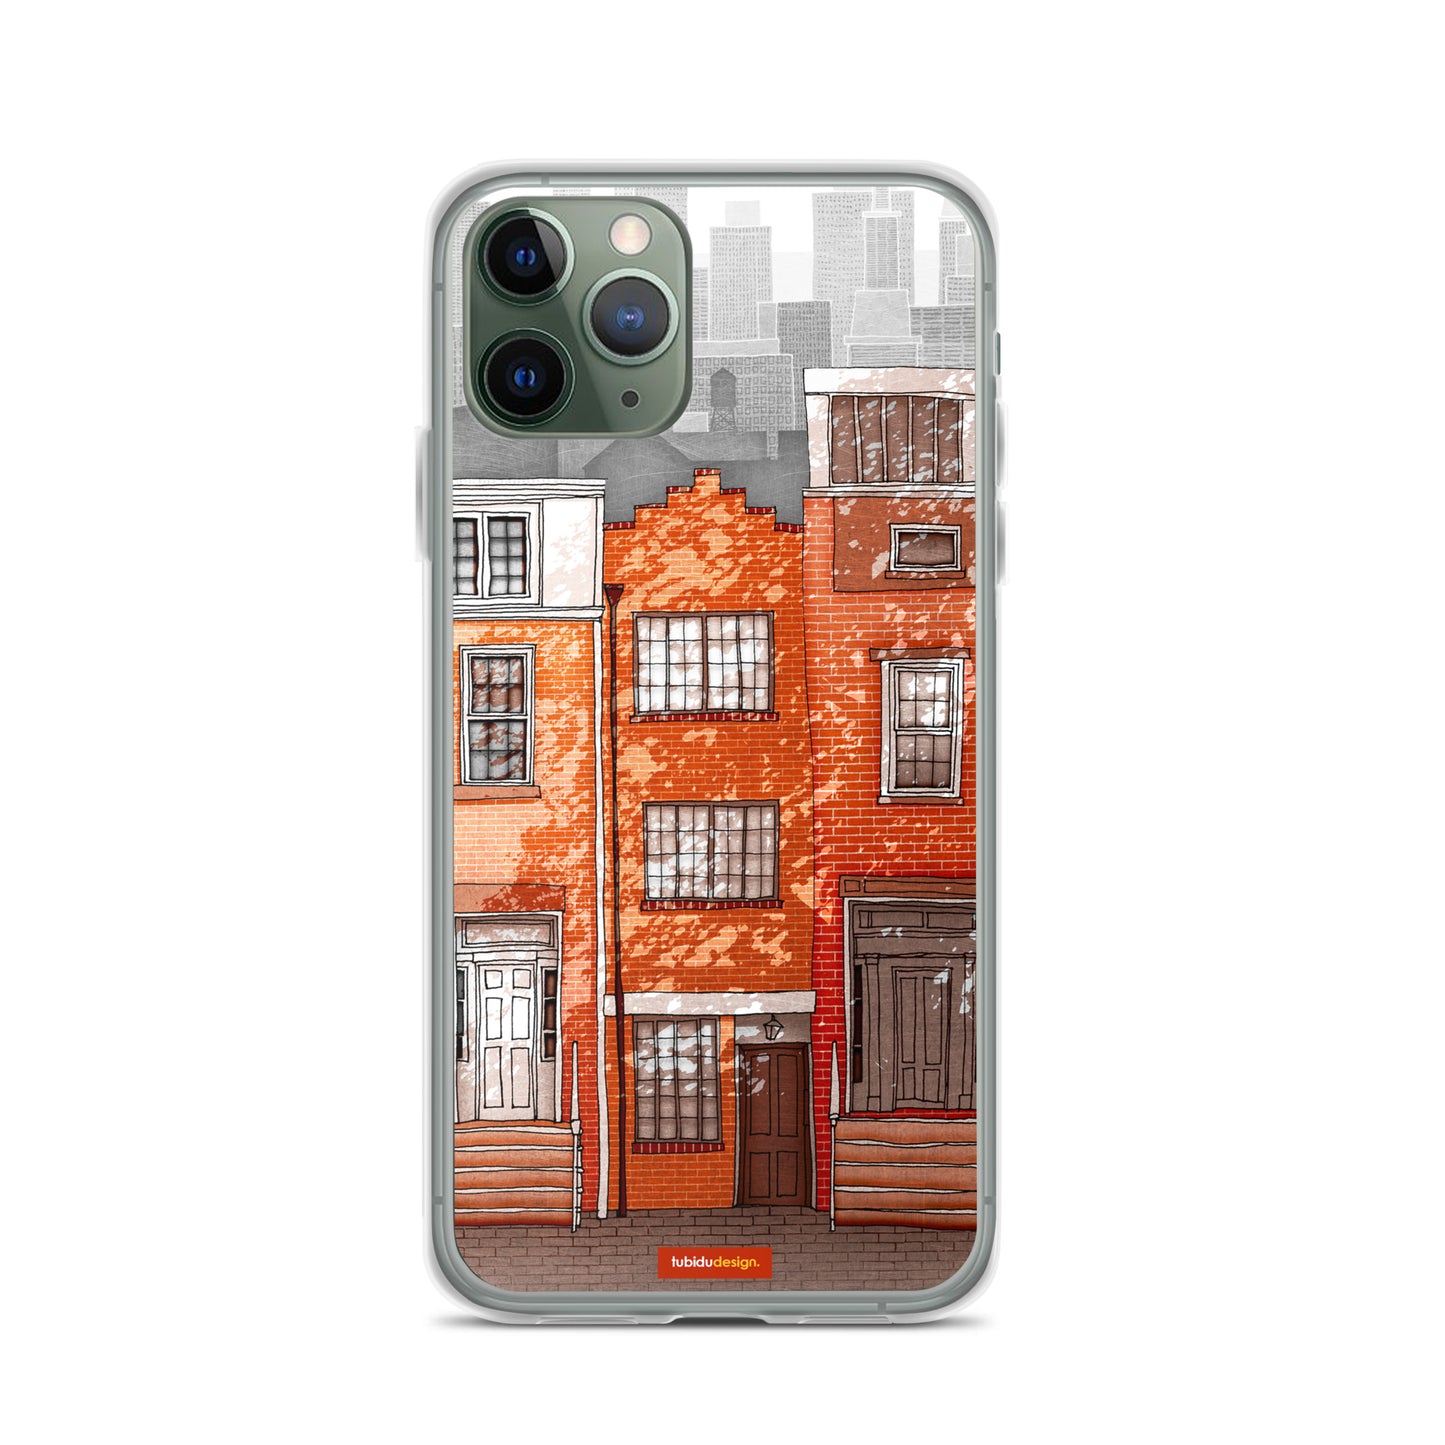 New York West Village - Illustrated iPhone Case